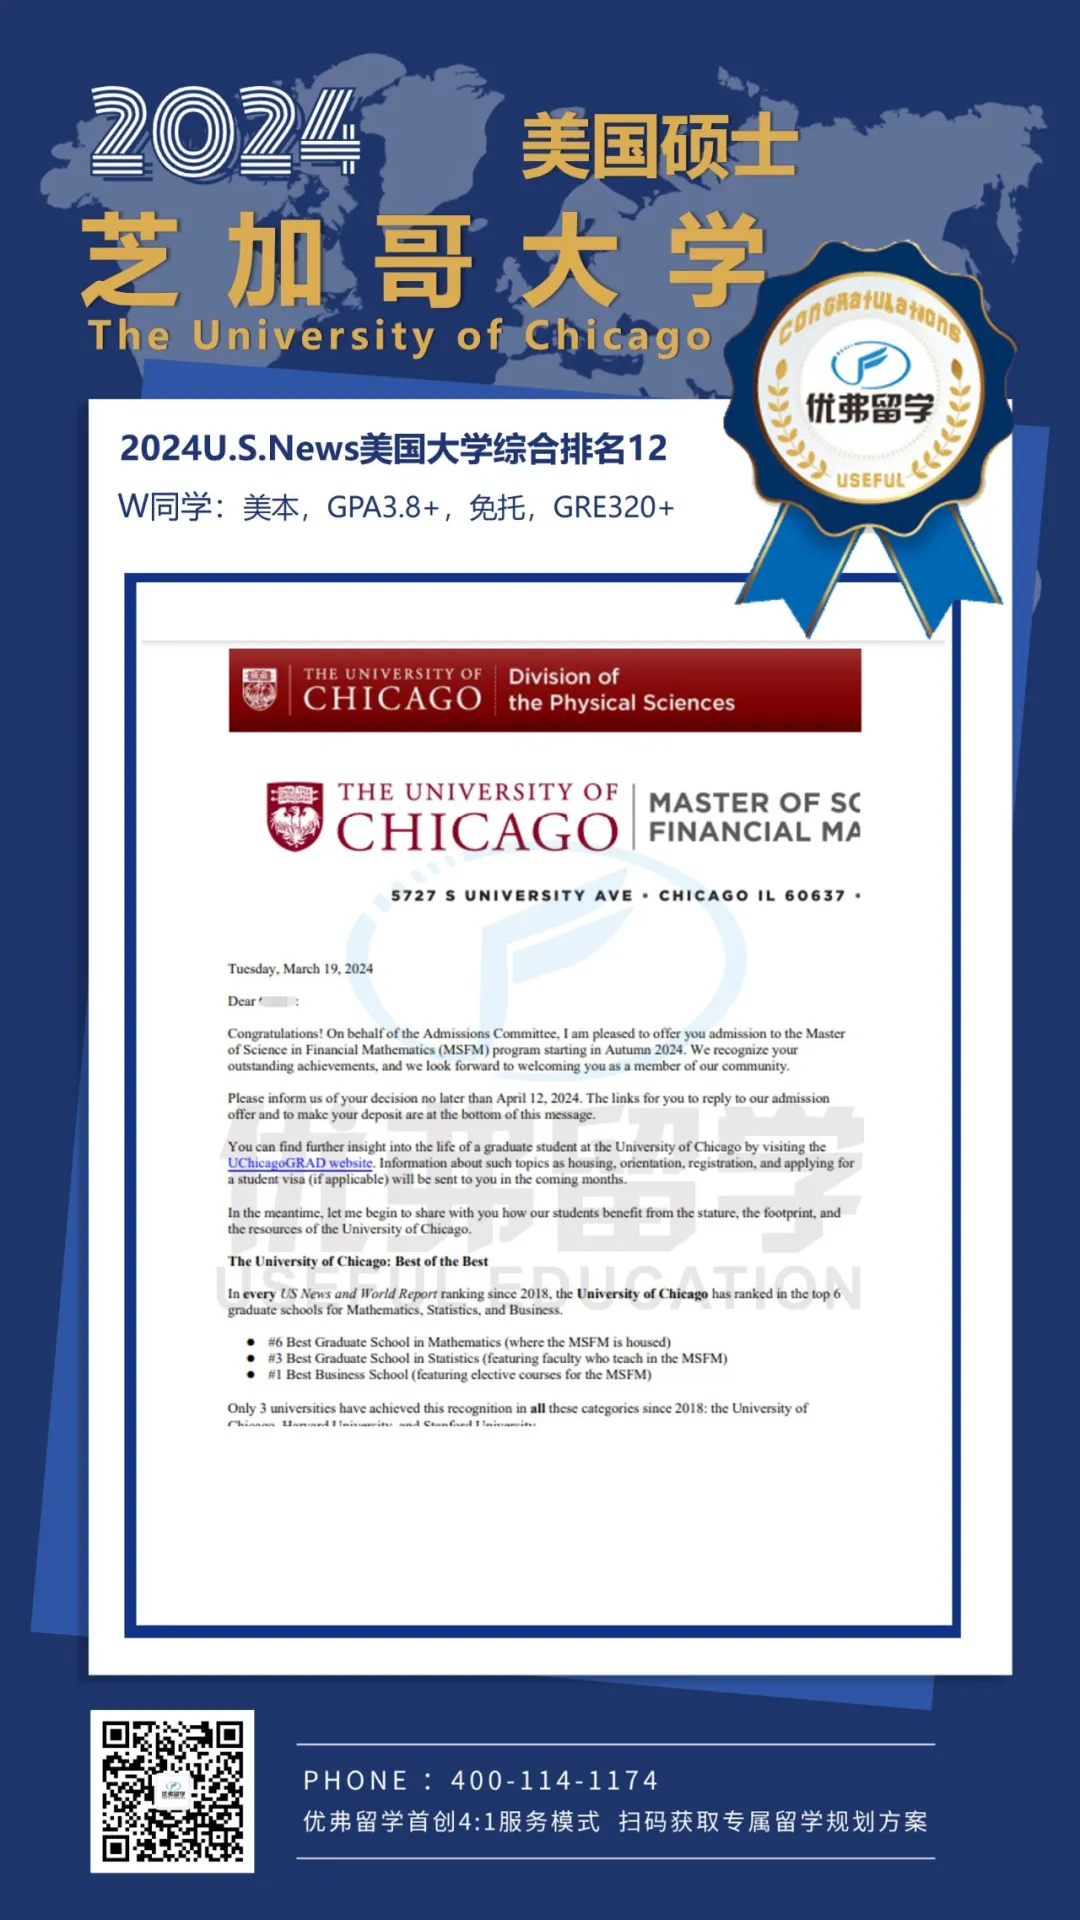 Z同学获世界顶尖学府——芝加哥大学金融数学硕士offer！